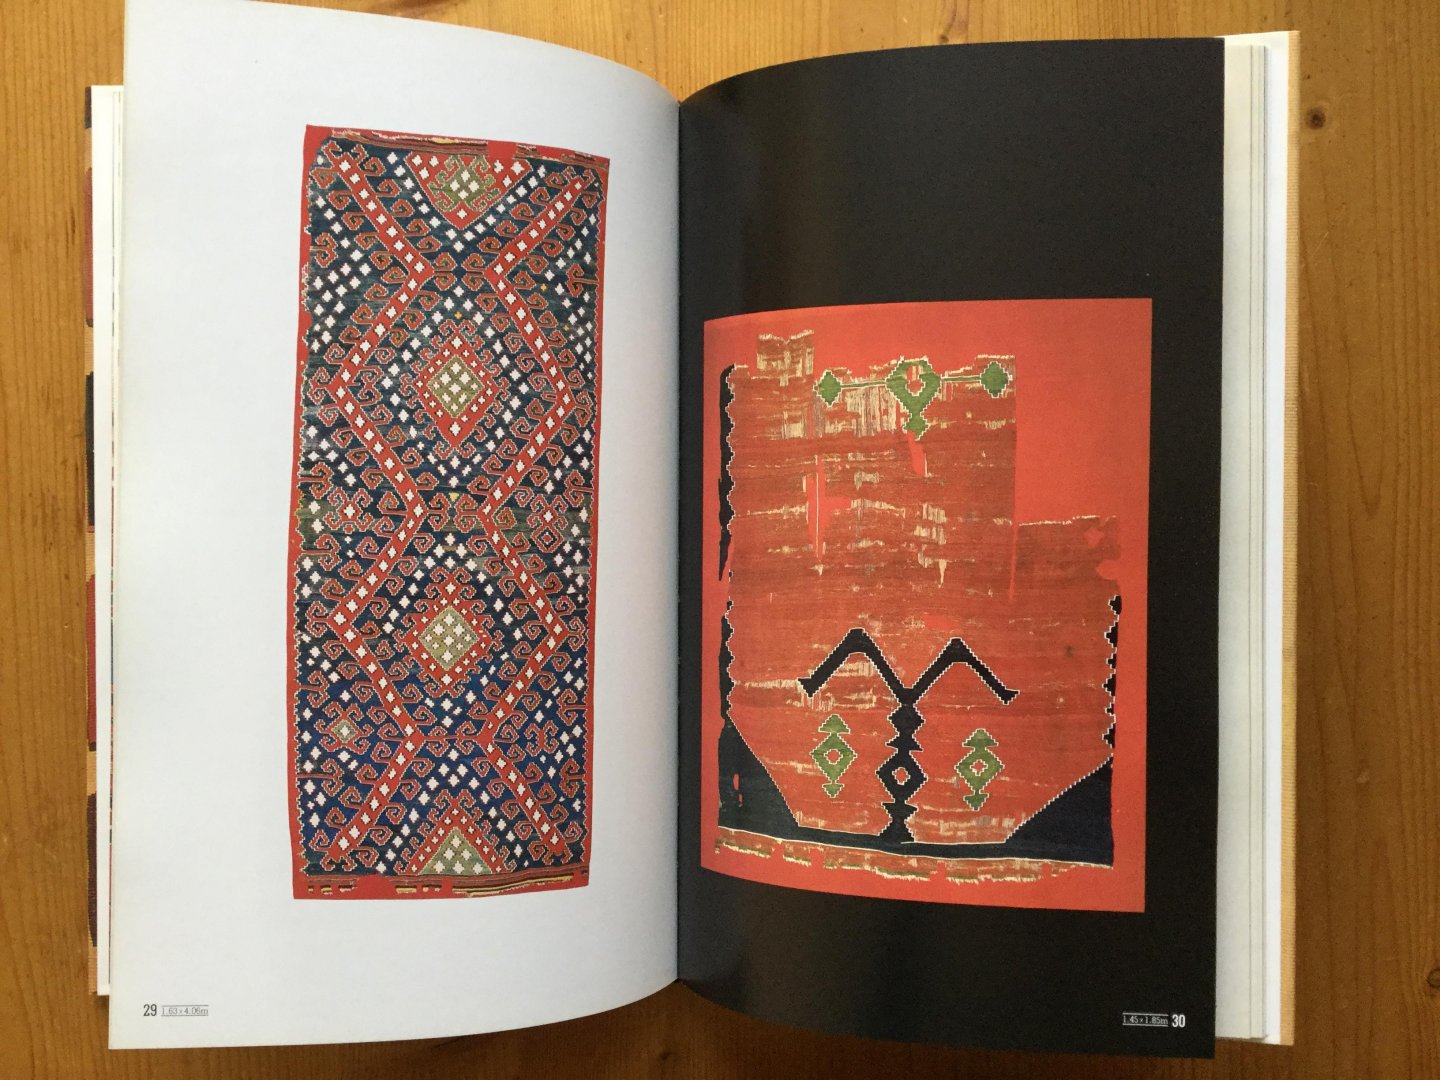 Petsopoulos, Yanni - 100 Kilims: Masterpieces from Anatolia